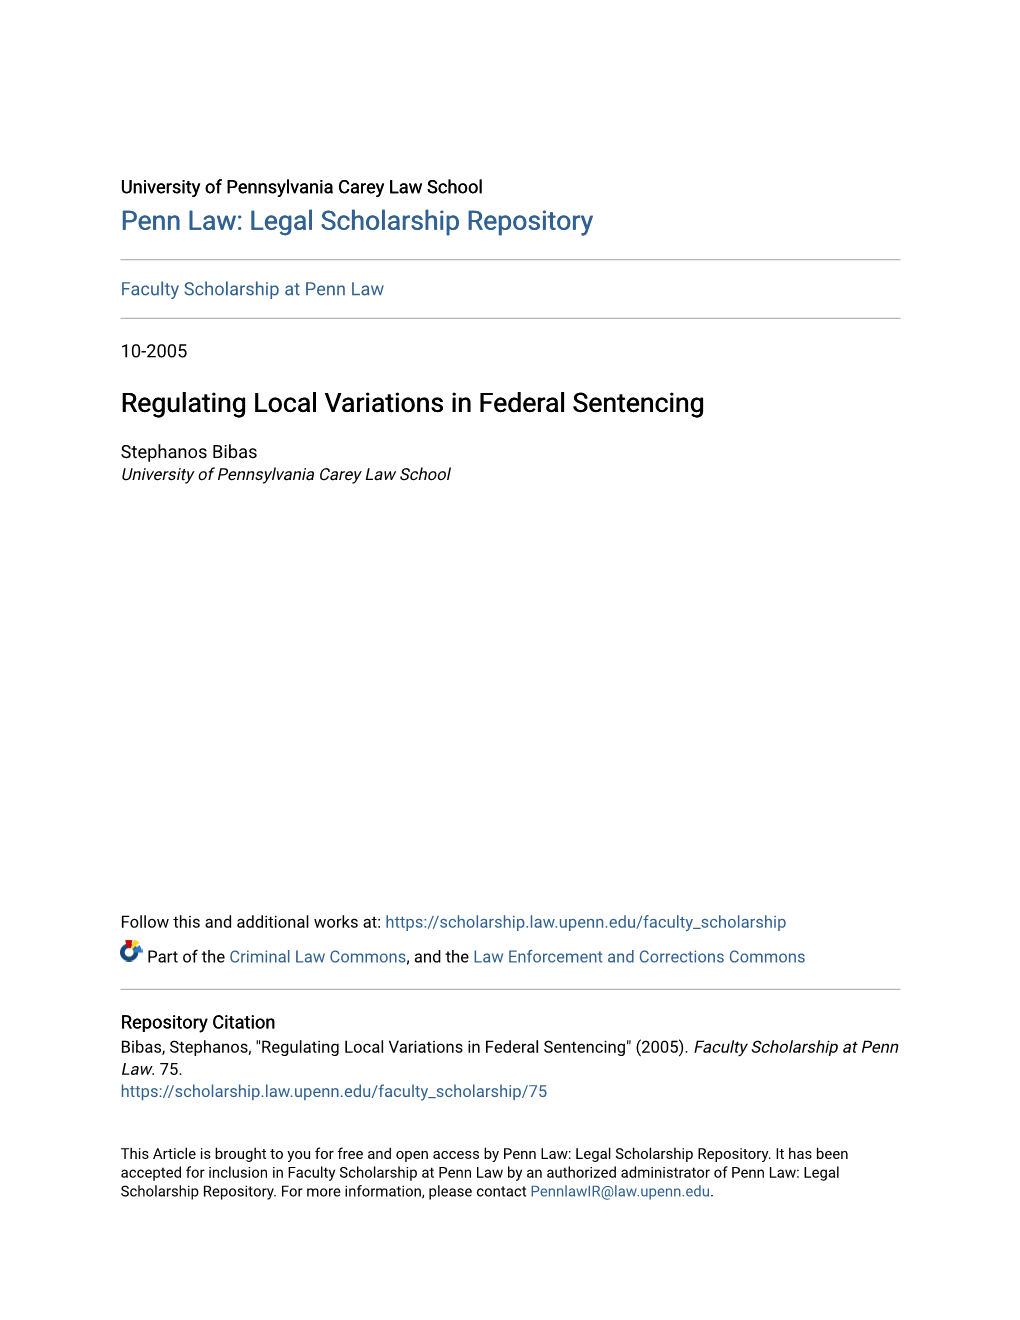 Regulating Local Variations in Federal Sentencing